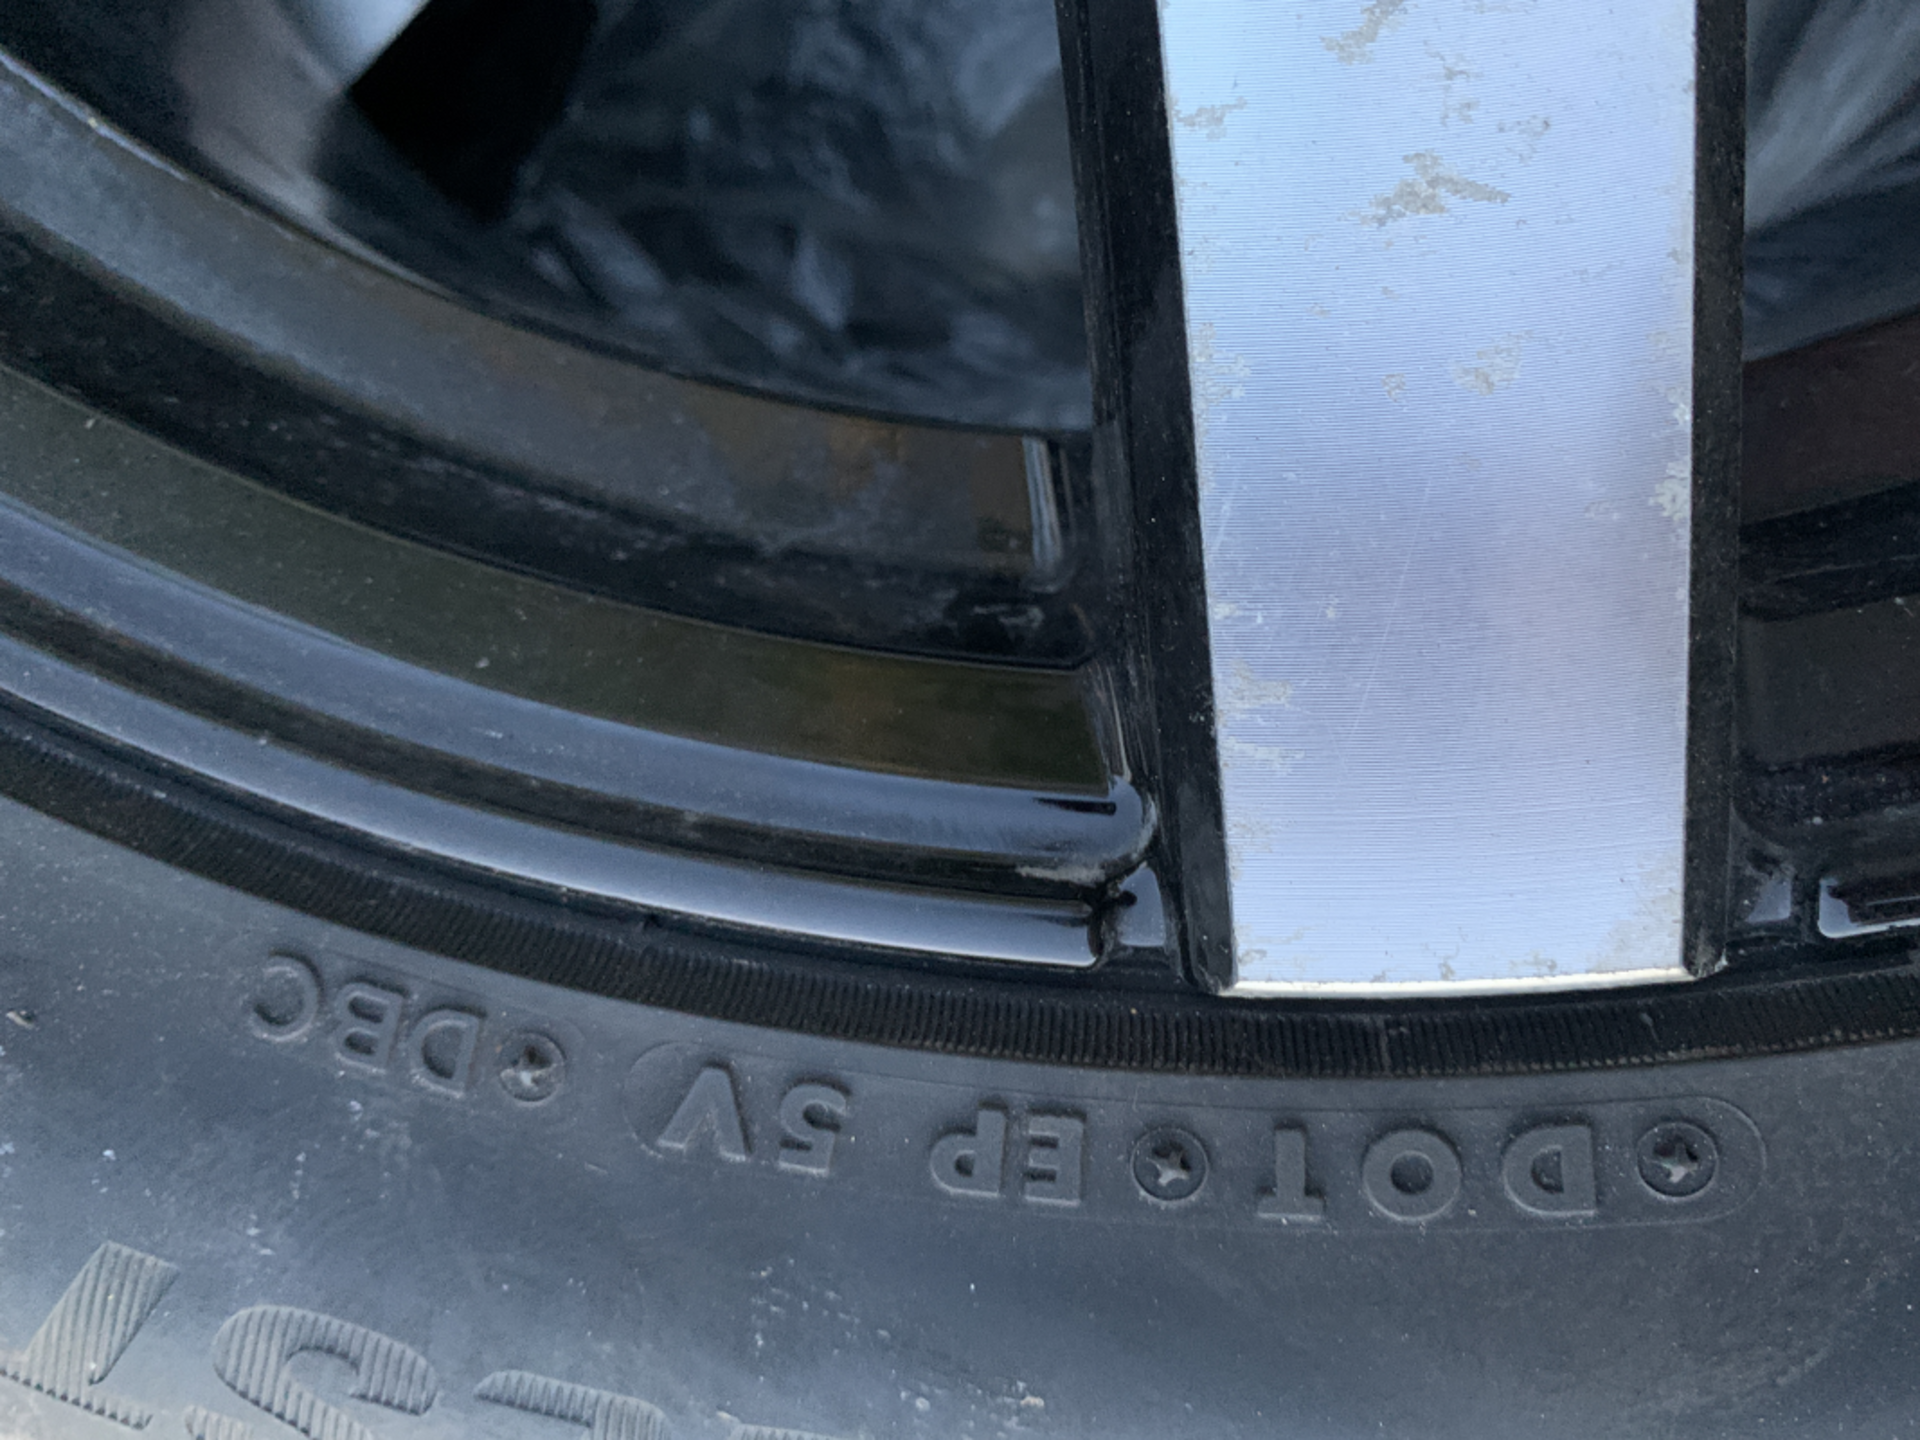 Bridgestone - BlizzakWinter Tires - Size: 235/50/R18 - Qty: 4 - Image 6 of 6